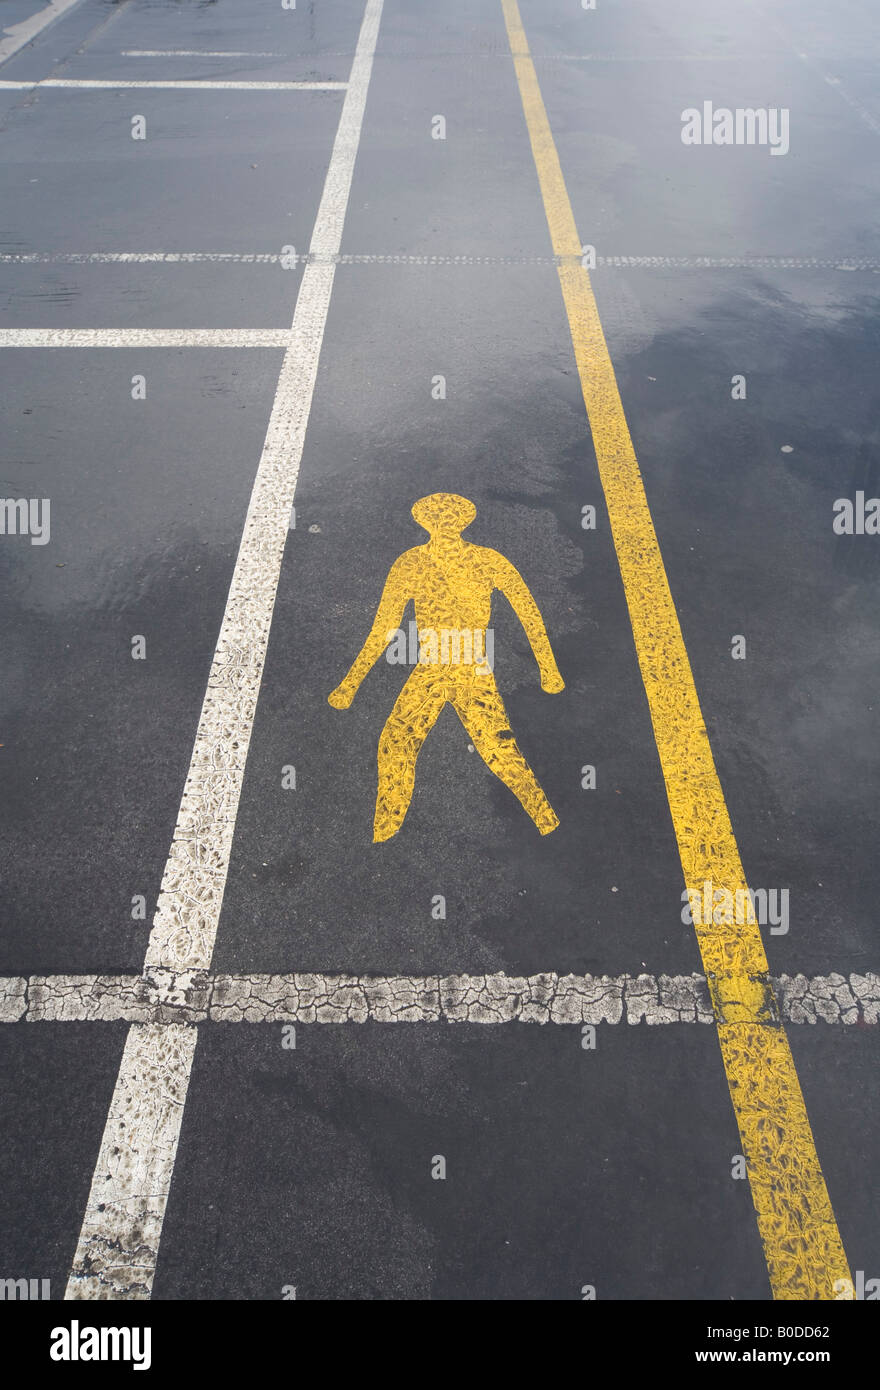 Road Marking of human figure showing pedestrian walkway through car park Stock Photo